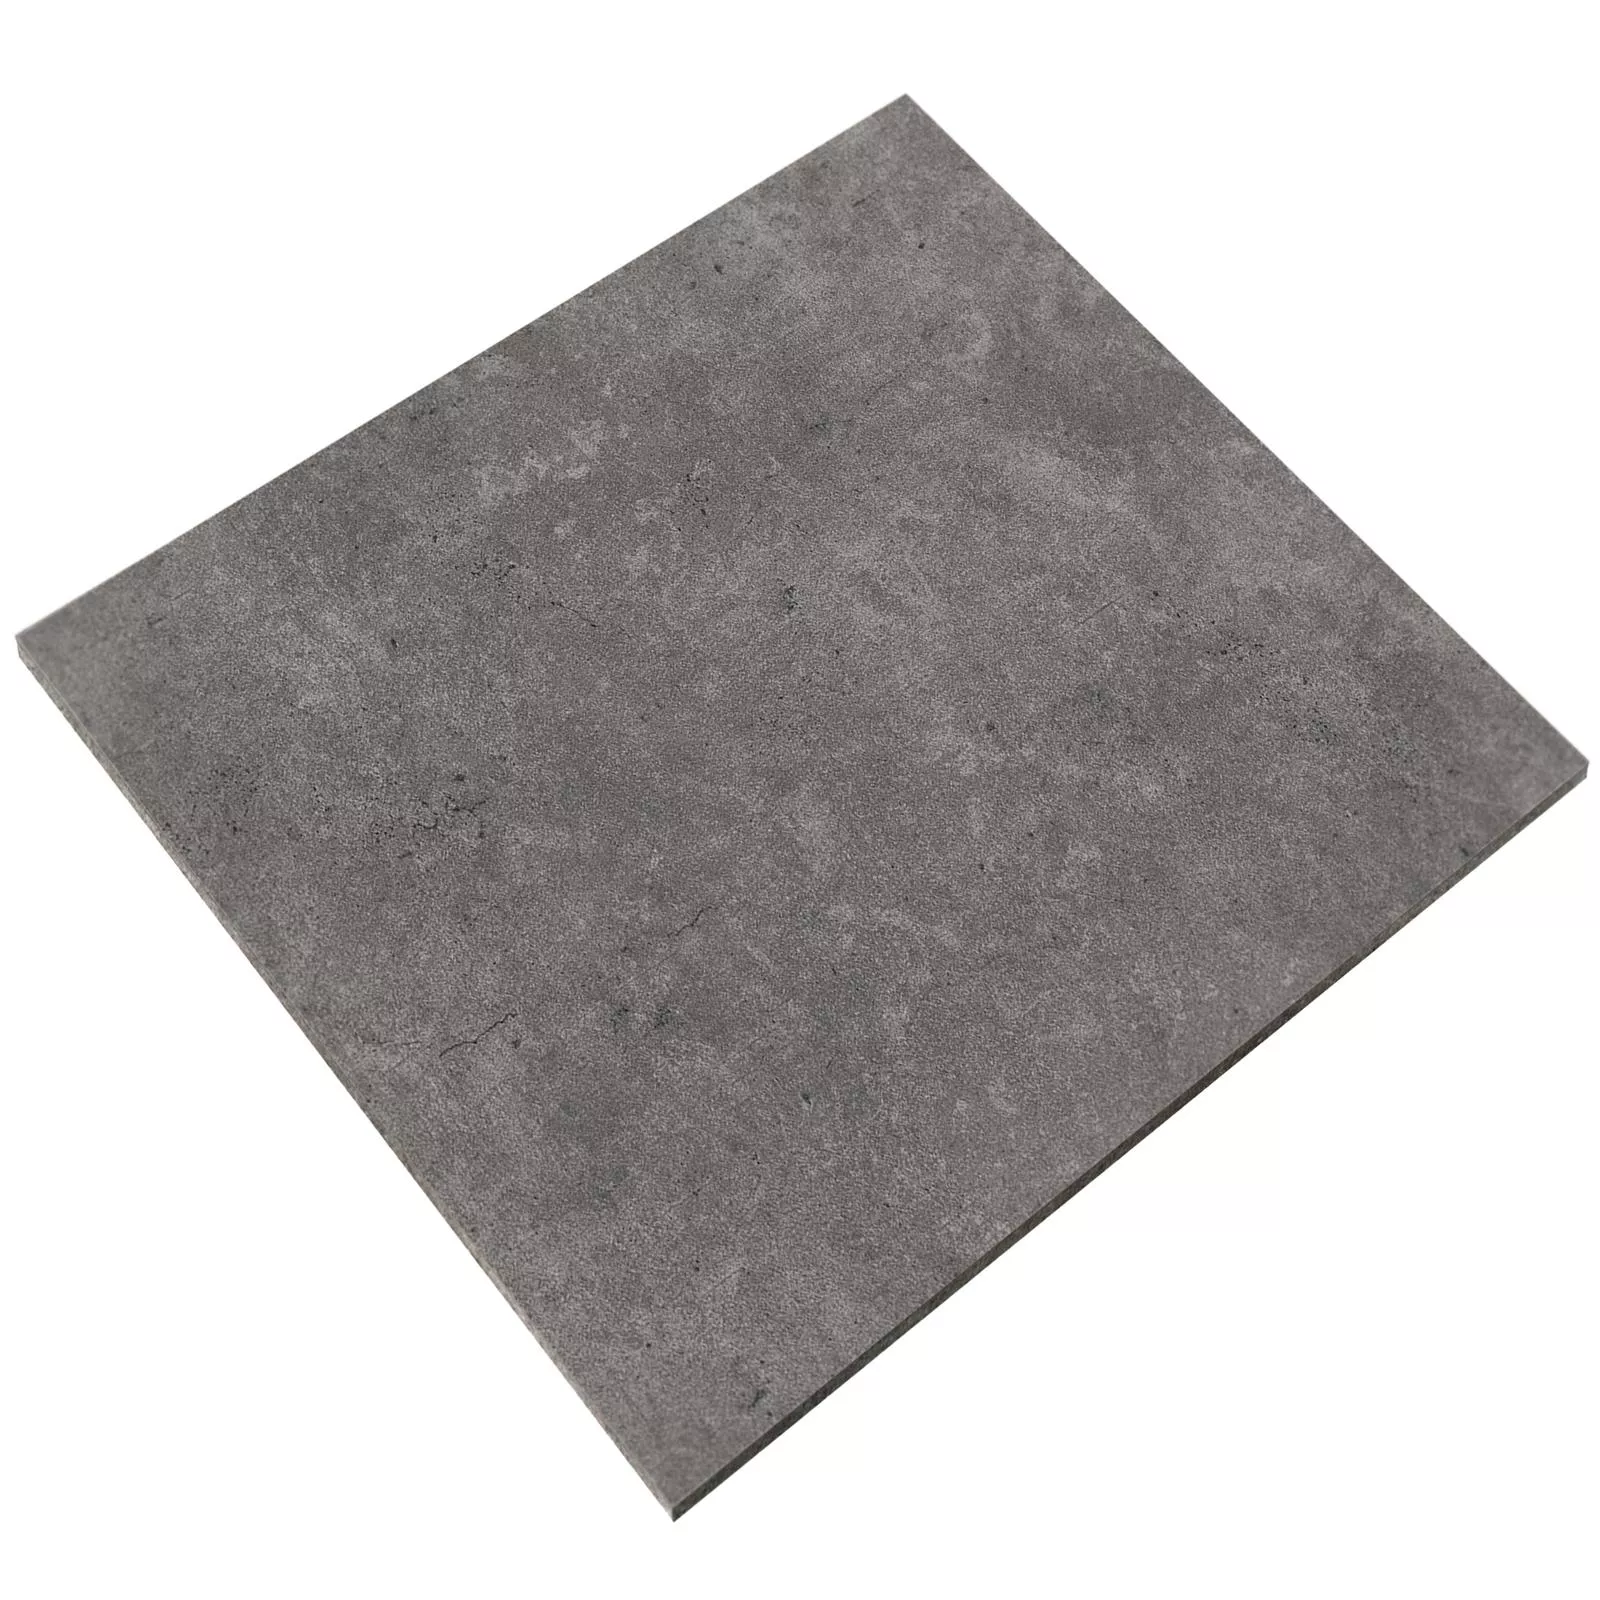 Floor Tiles Jamaica Beton Optic Anthracite 60x60cm